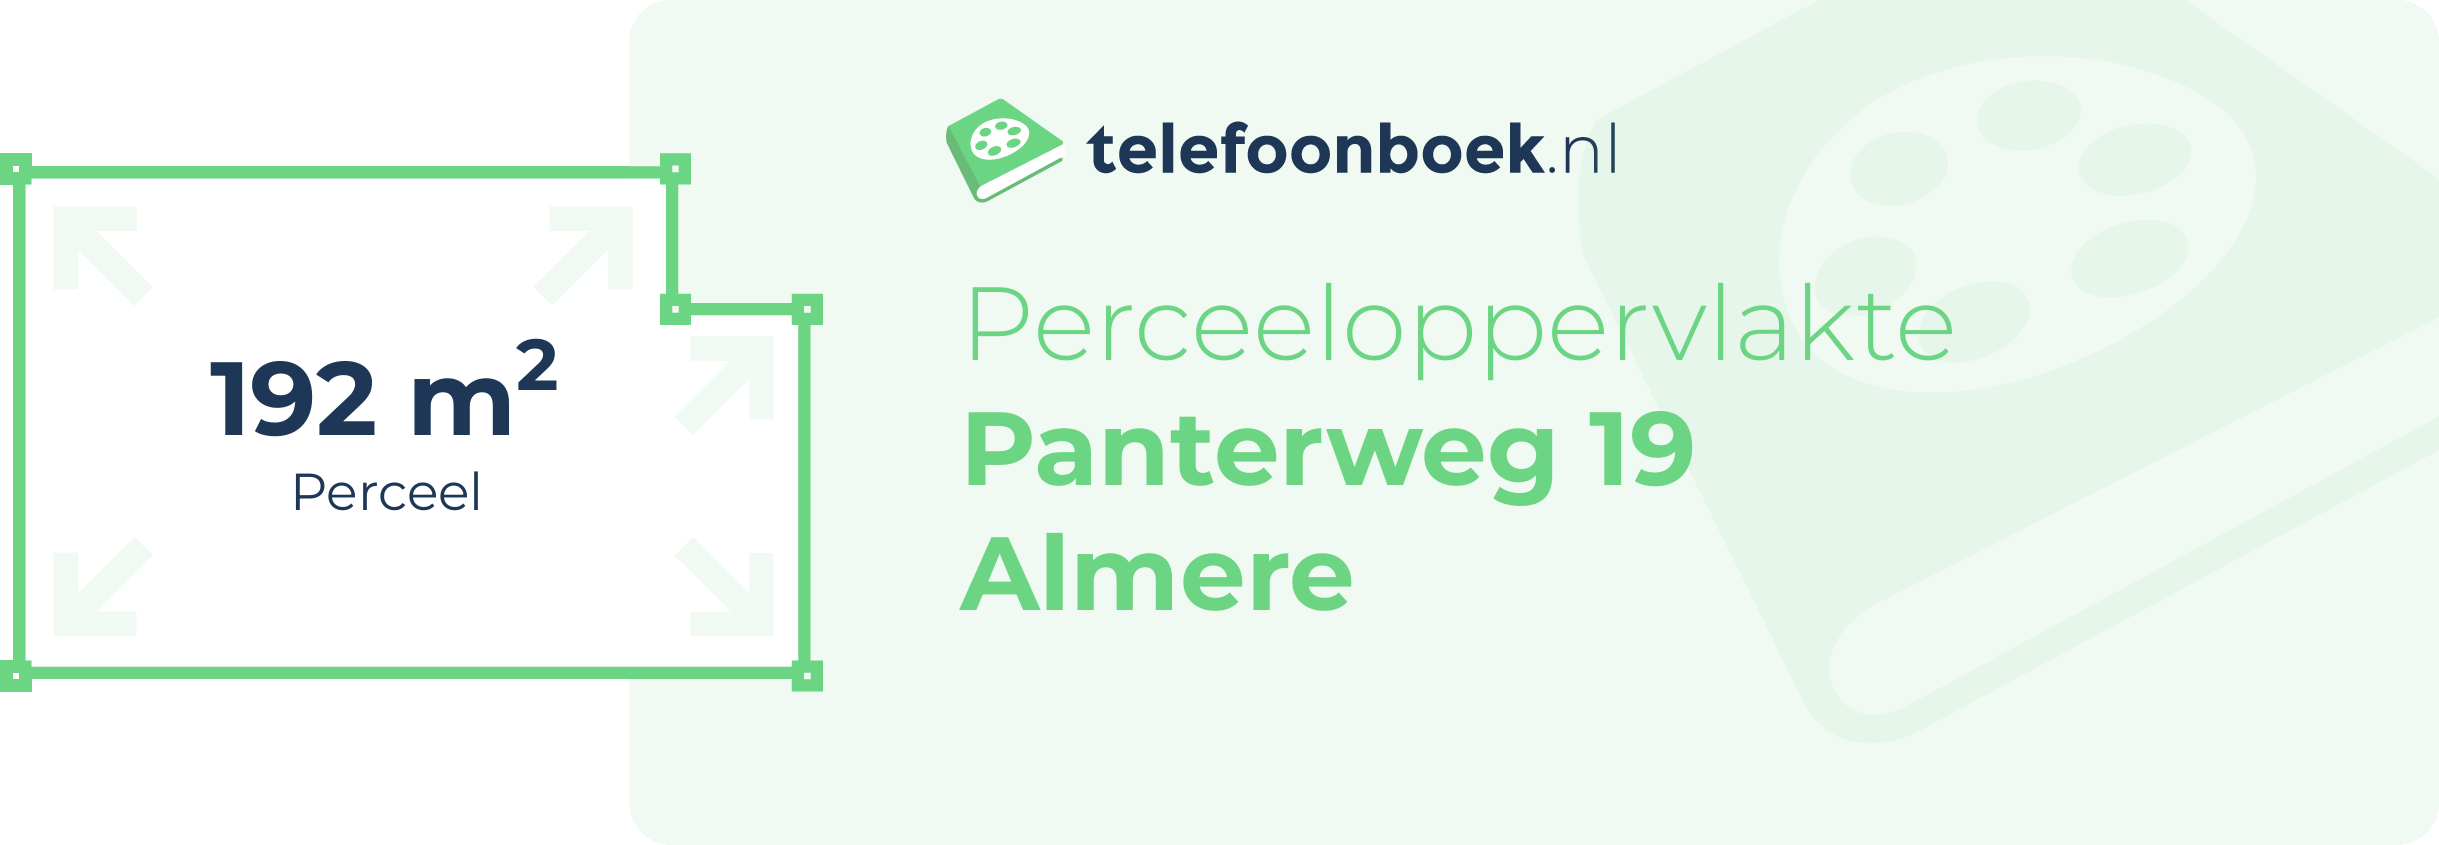 Perceeloppervlakte Panterweg 19 Almere